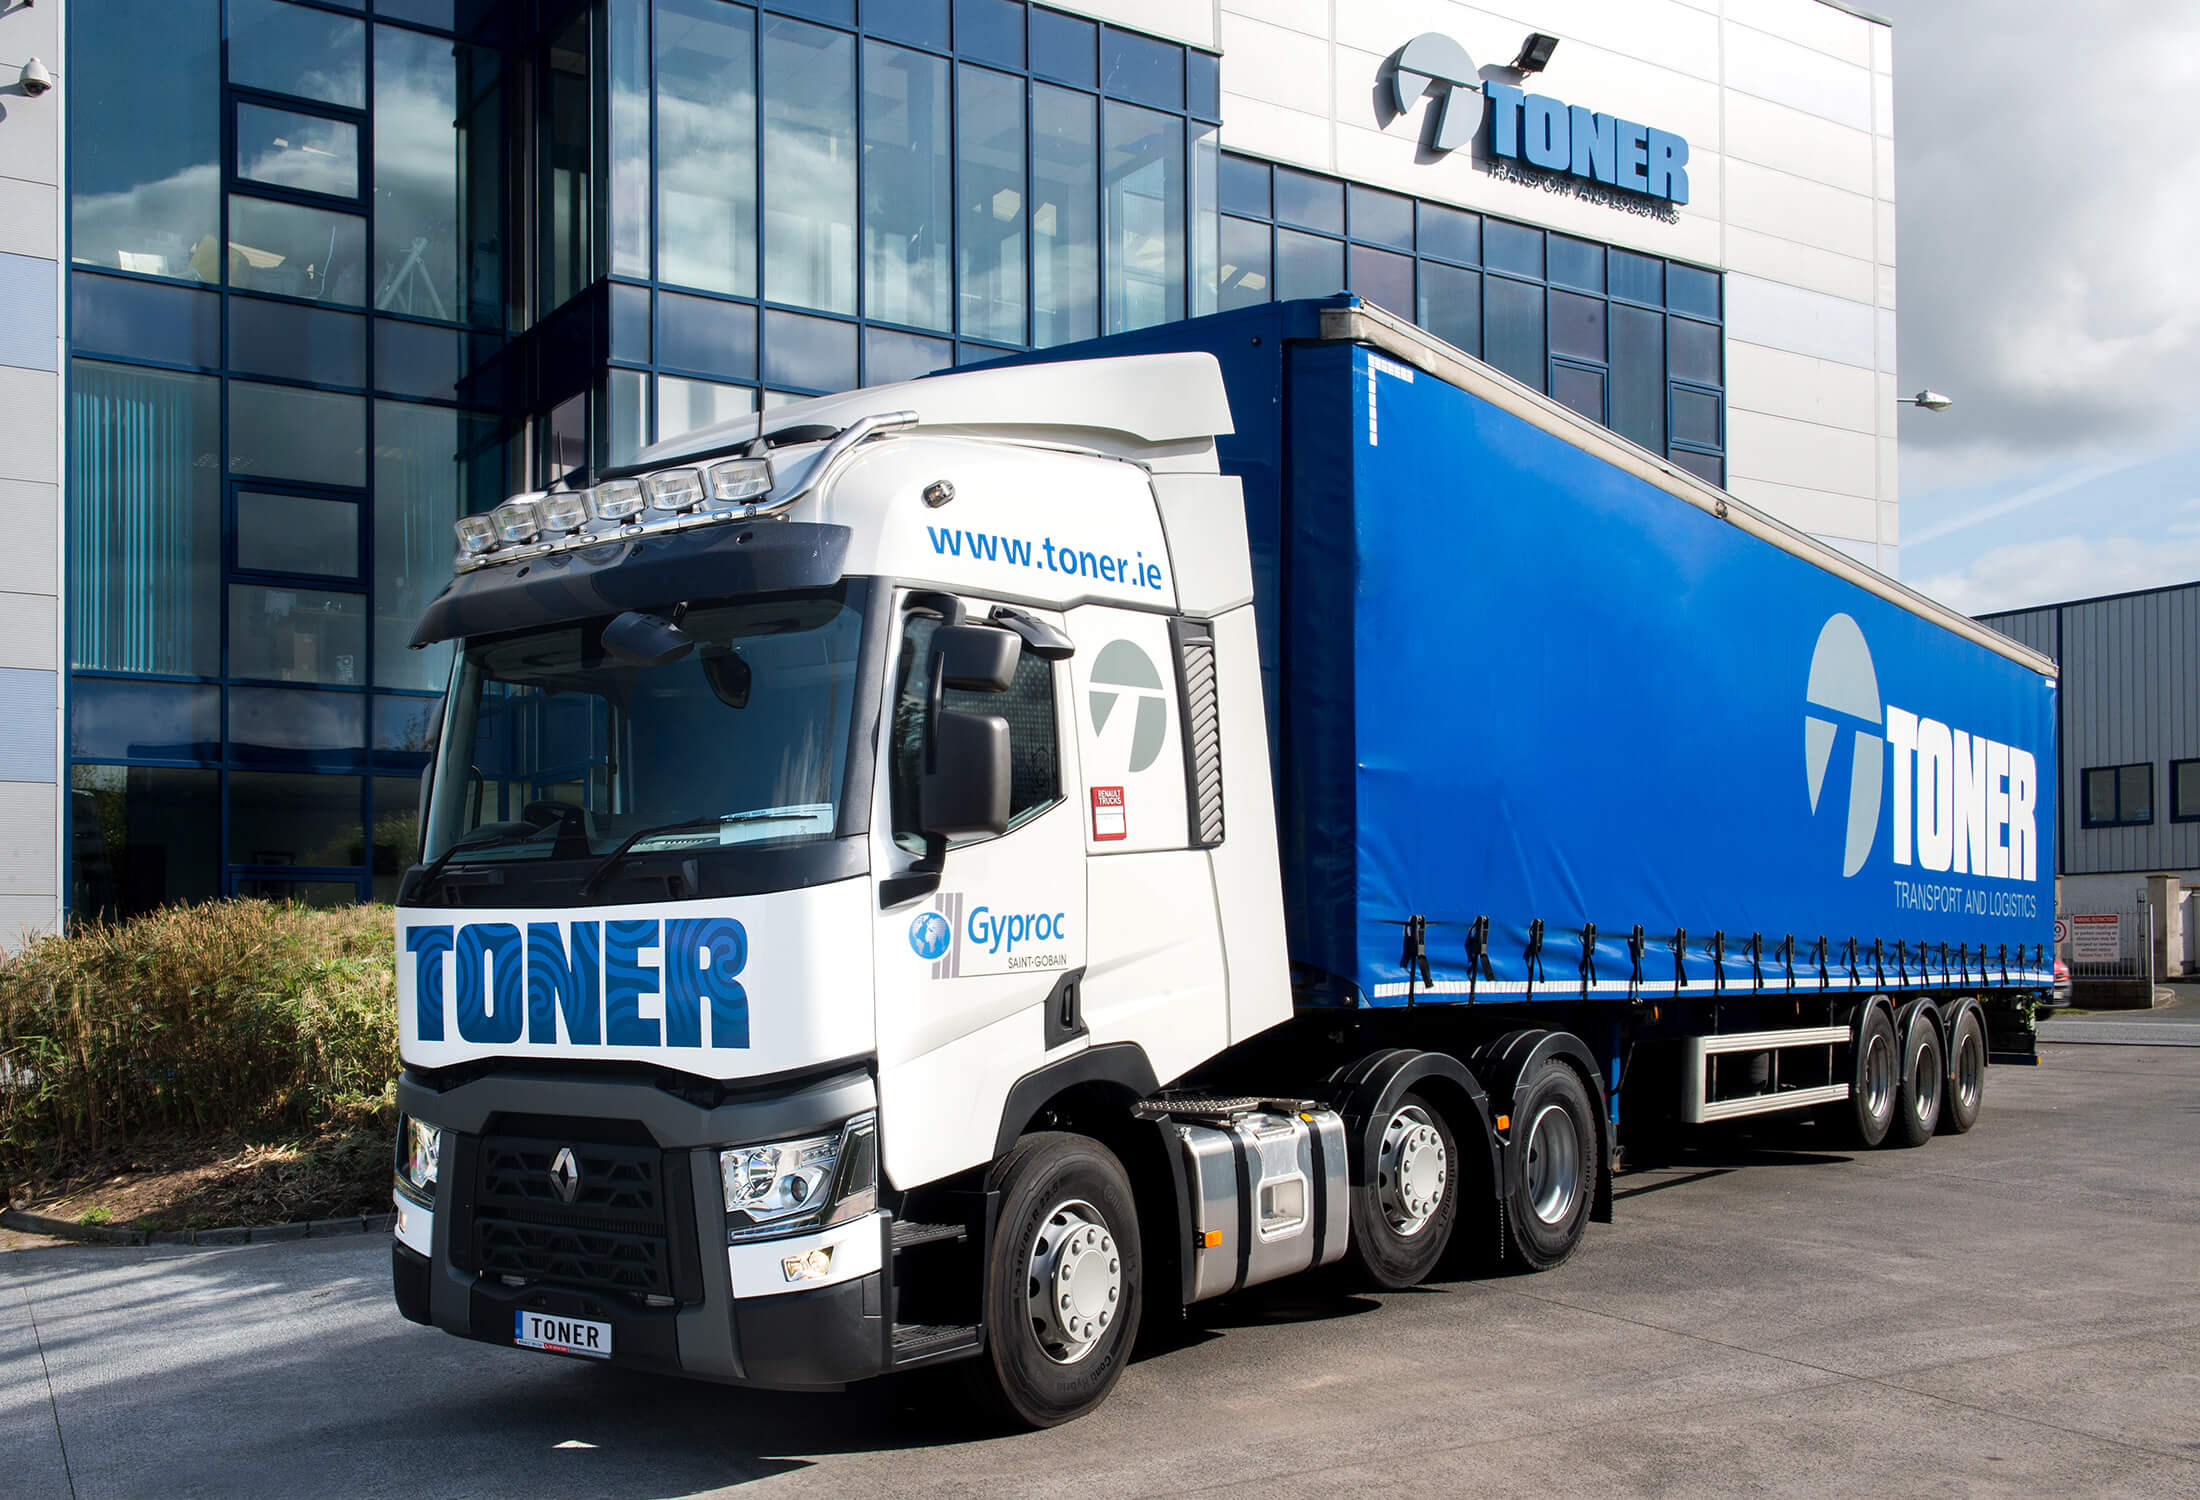 Toner Transport & Logistics haulage delivery trucks on the motorway